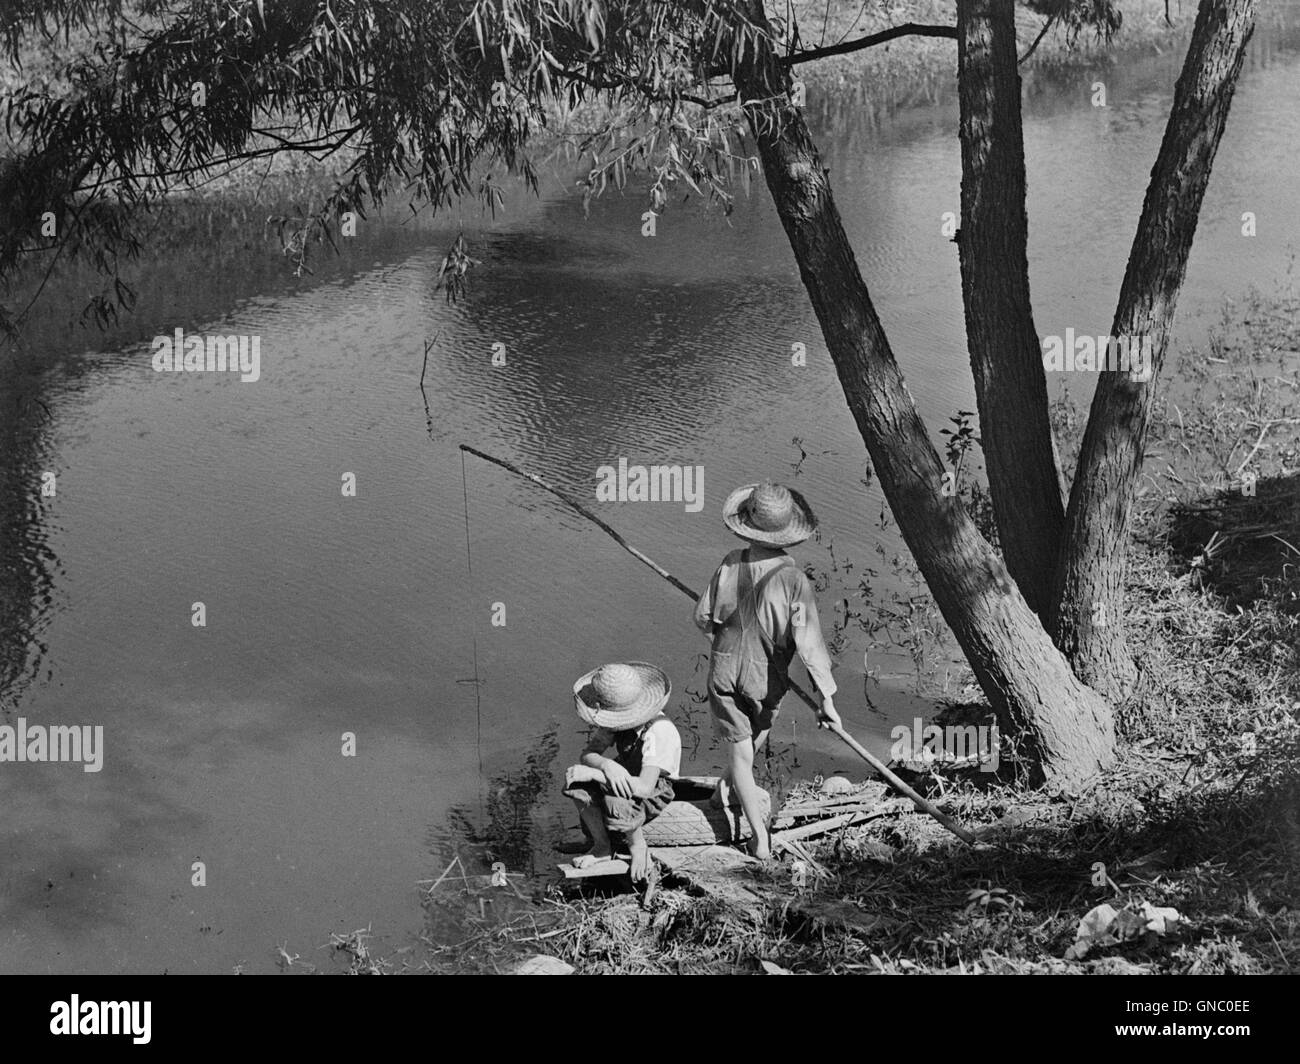 Two Cajun Boys Fishing in Bayou, Schriever, Terrabonne Parish, Louisiana, USA, Marion Post Wolcott for Farm Security Administration, June 1940 Stock Photo